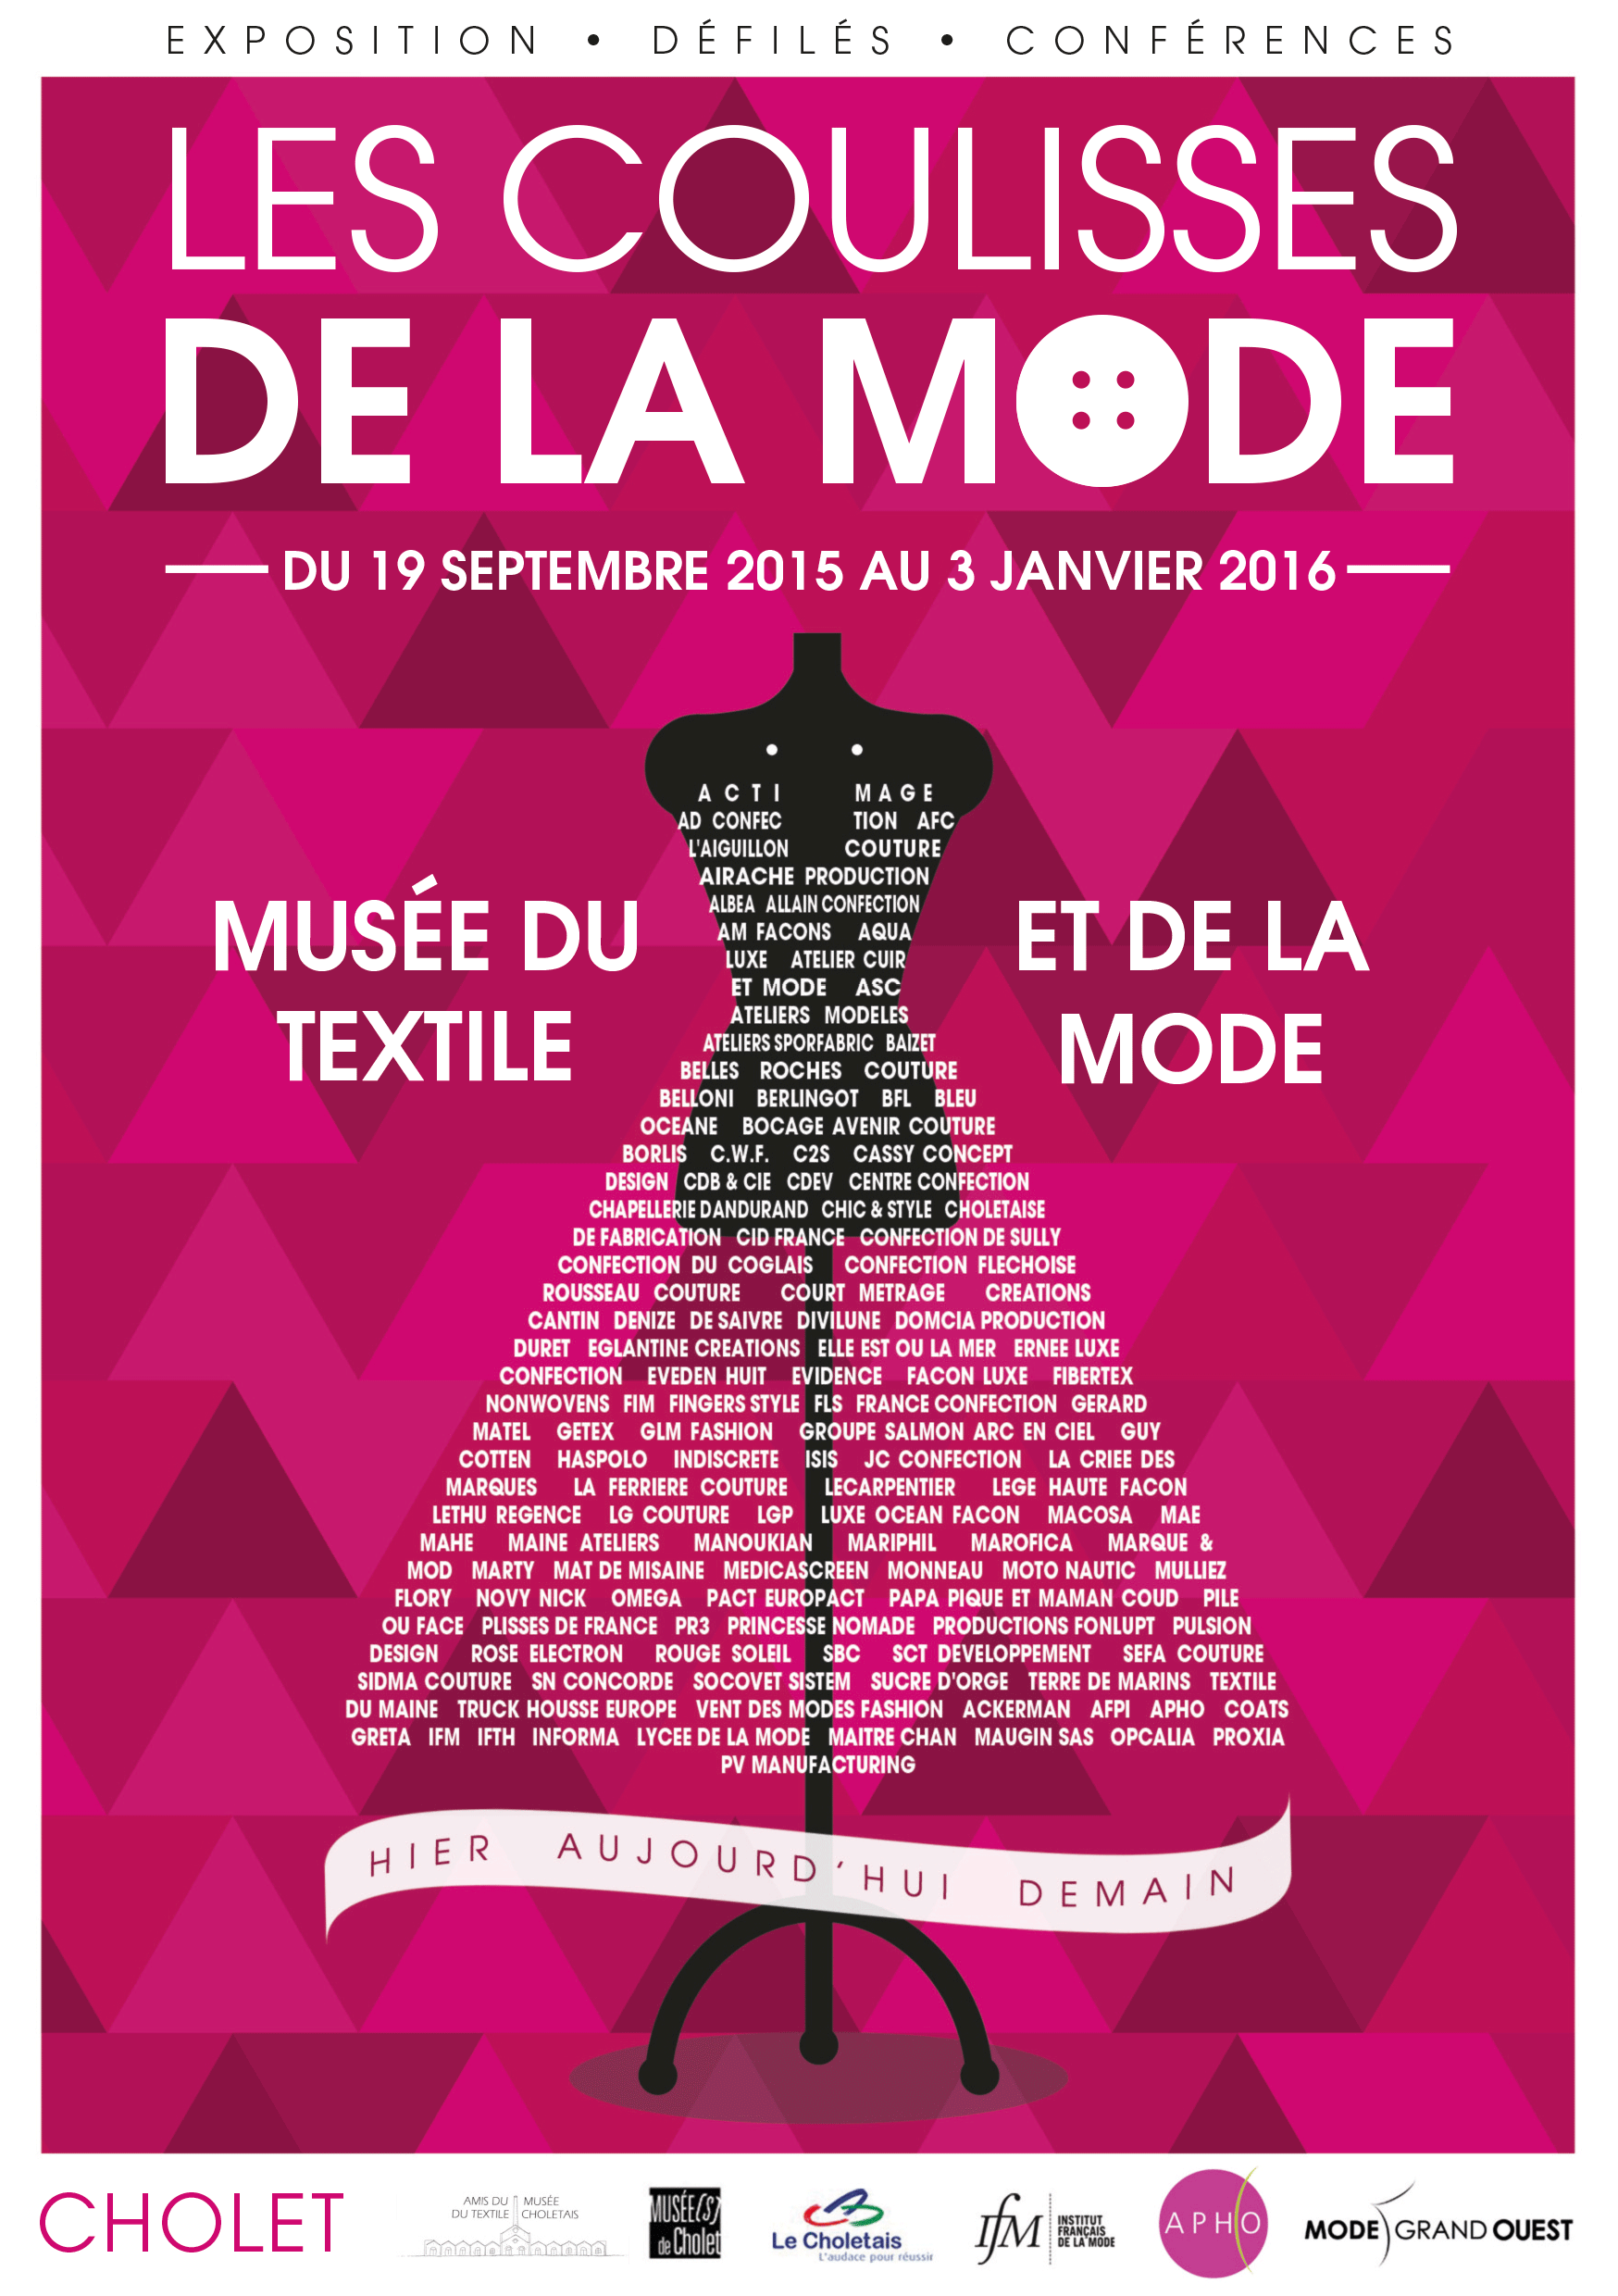 ExpositionCoulissesDeLaMode-MuséeTextile-Cholet